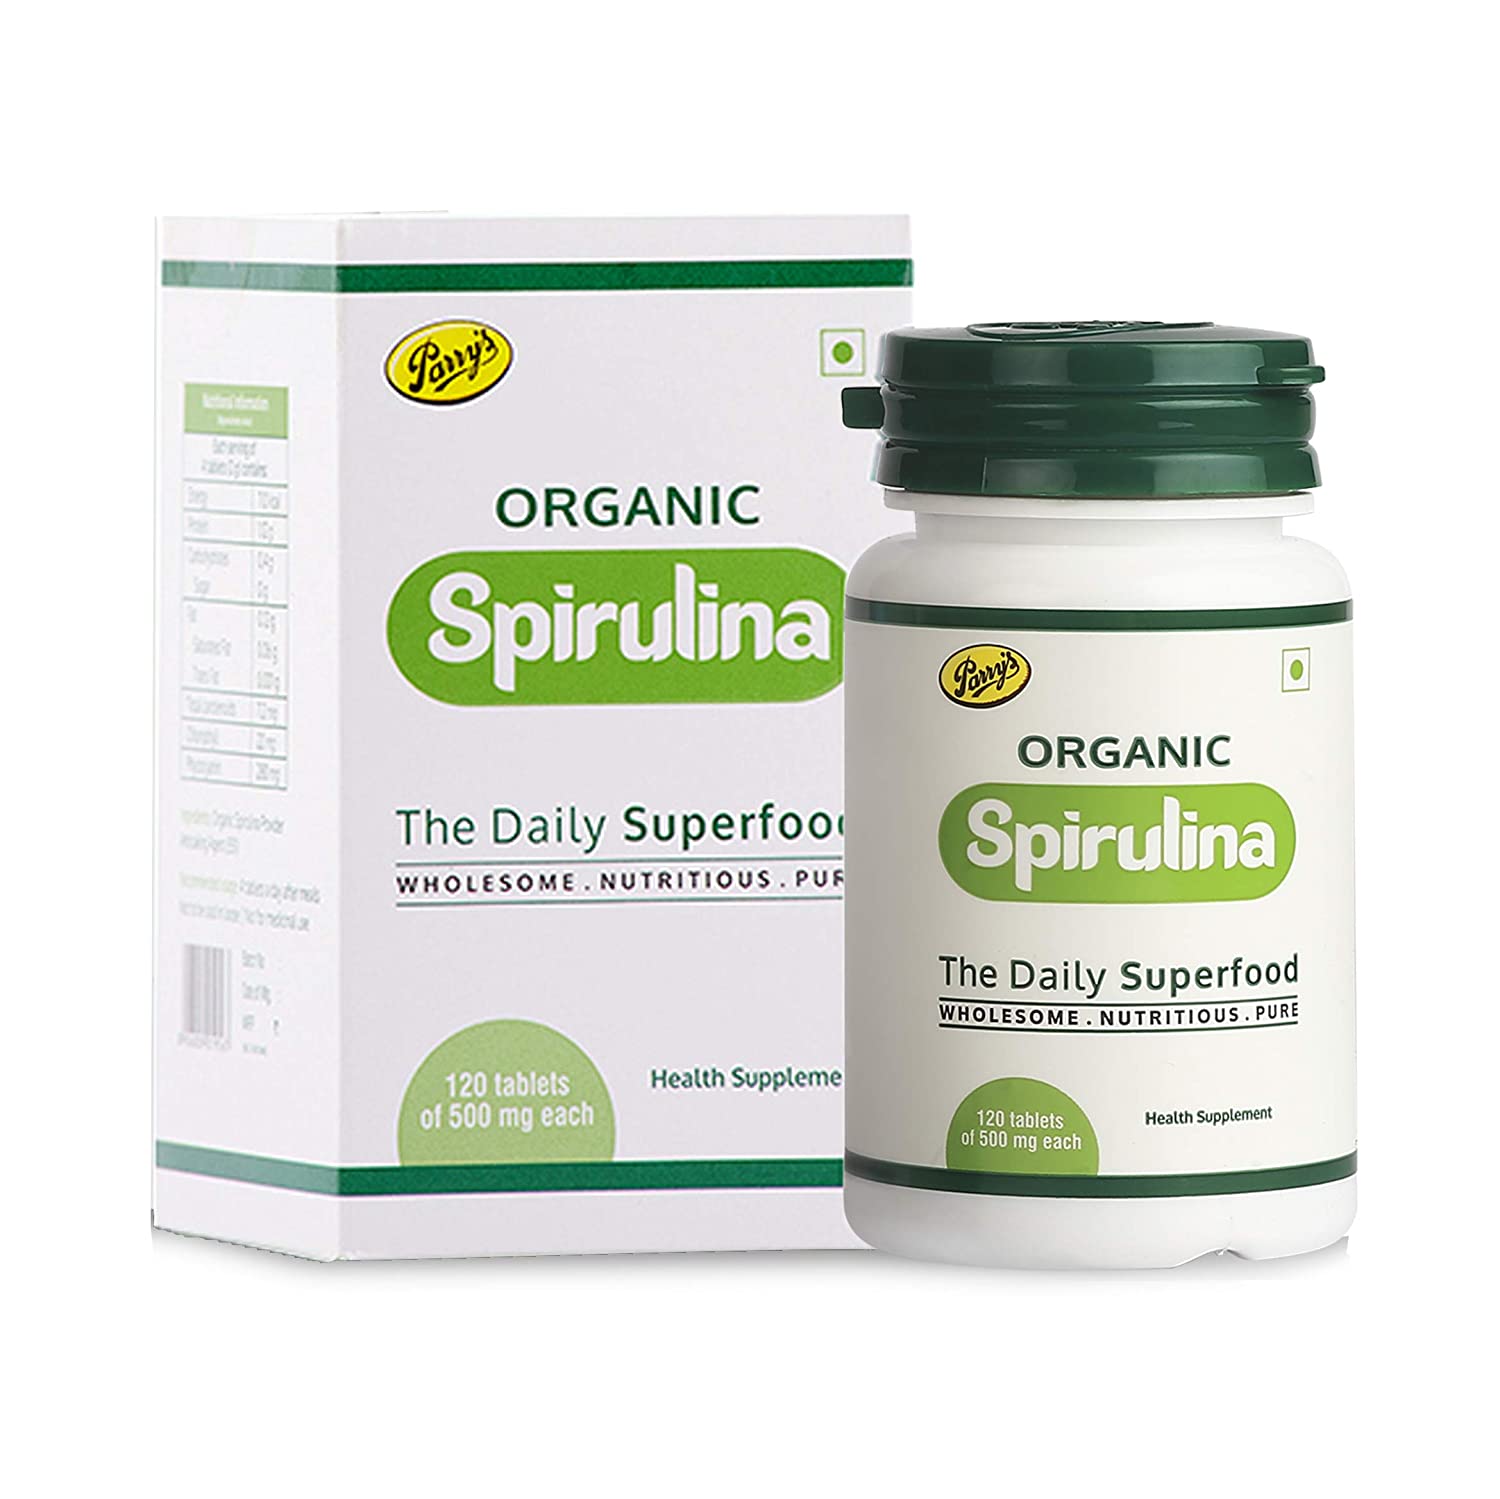 Parry's Organic Spirulina Tablets 120 Tablets - Pack of 2